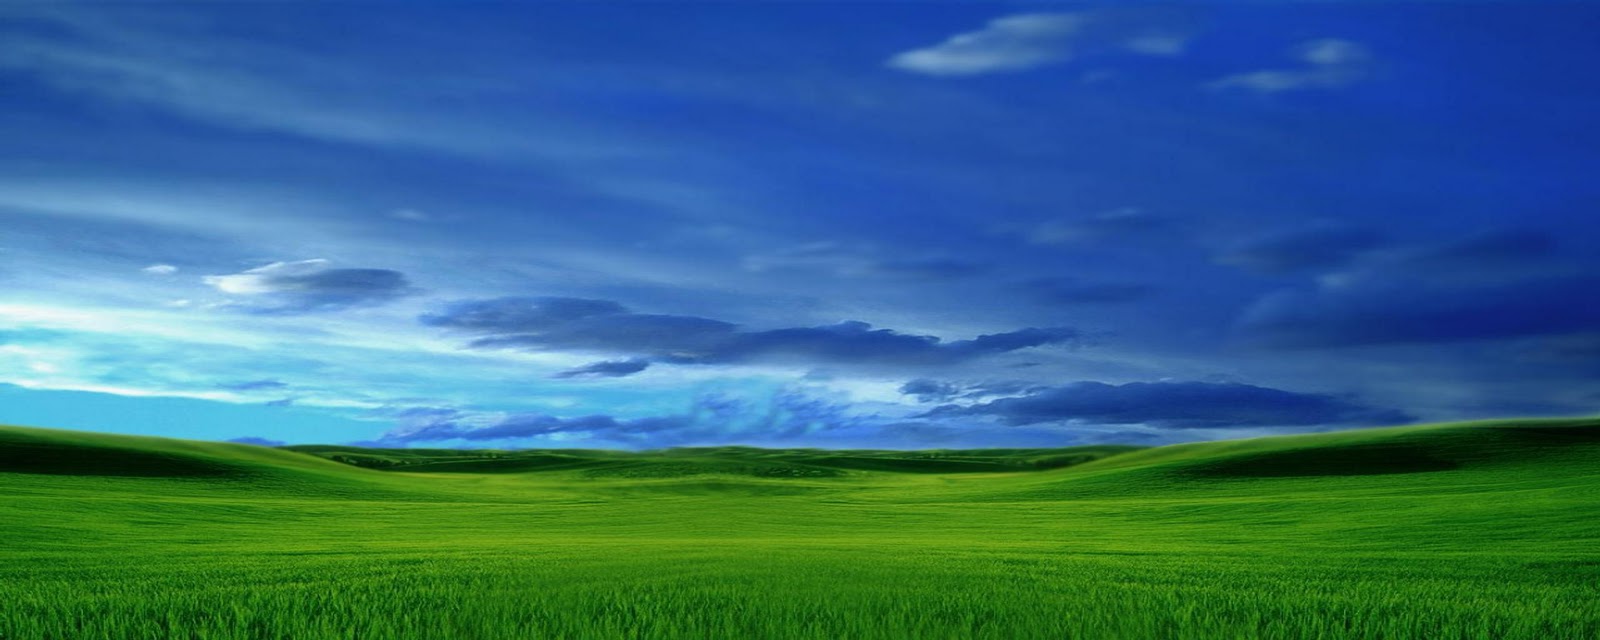 wow wallpaper galleries: Windows XP Dual Screen